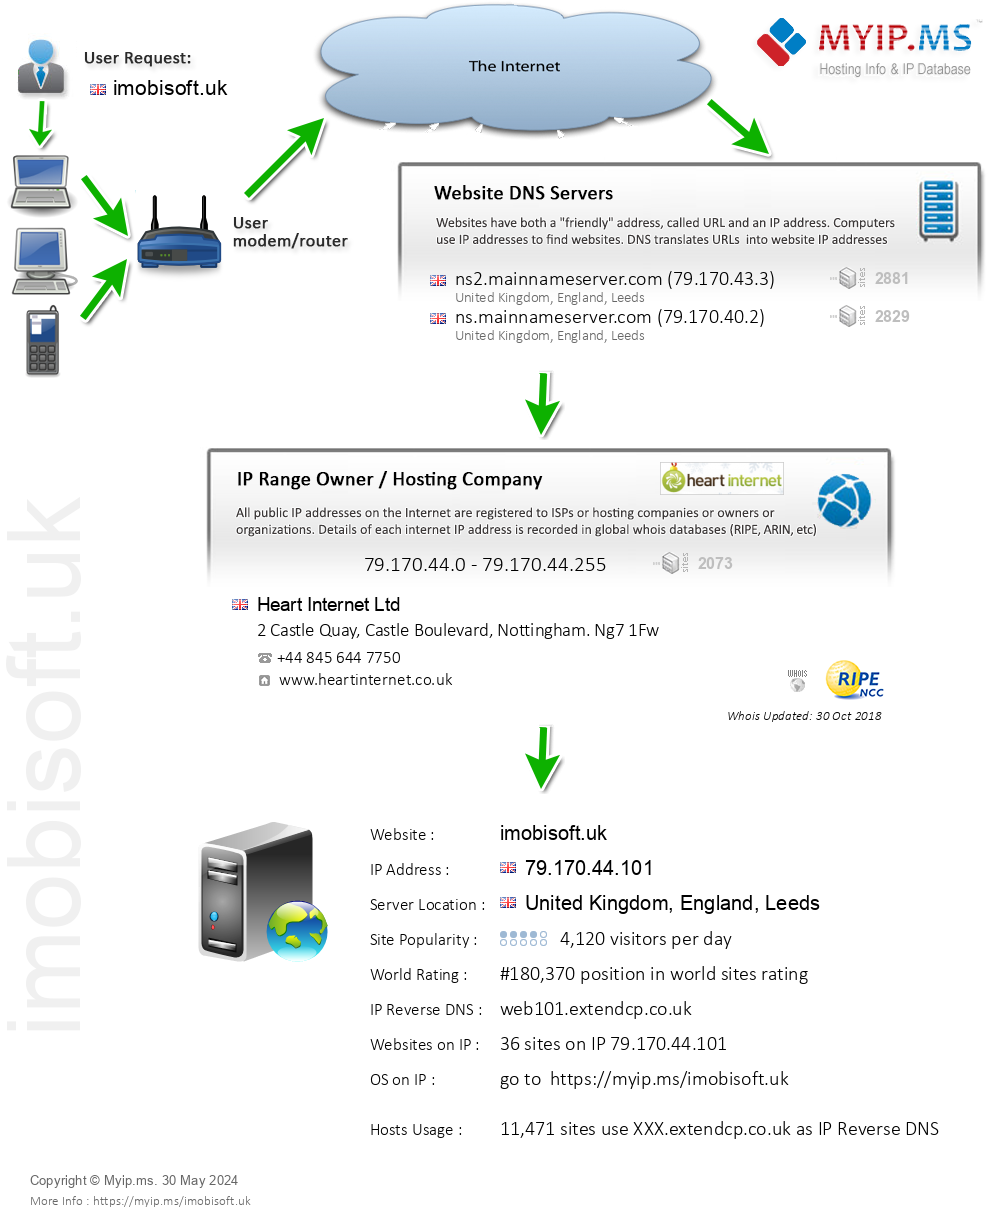 Imobisoft.uk - Website Hosting Visual IP Diagram